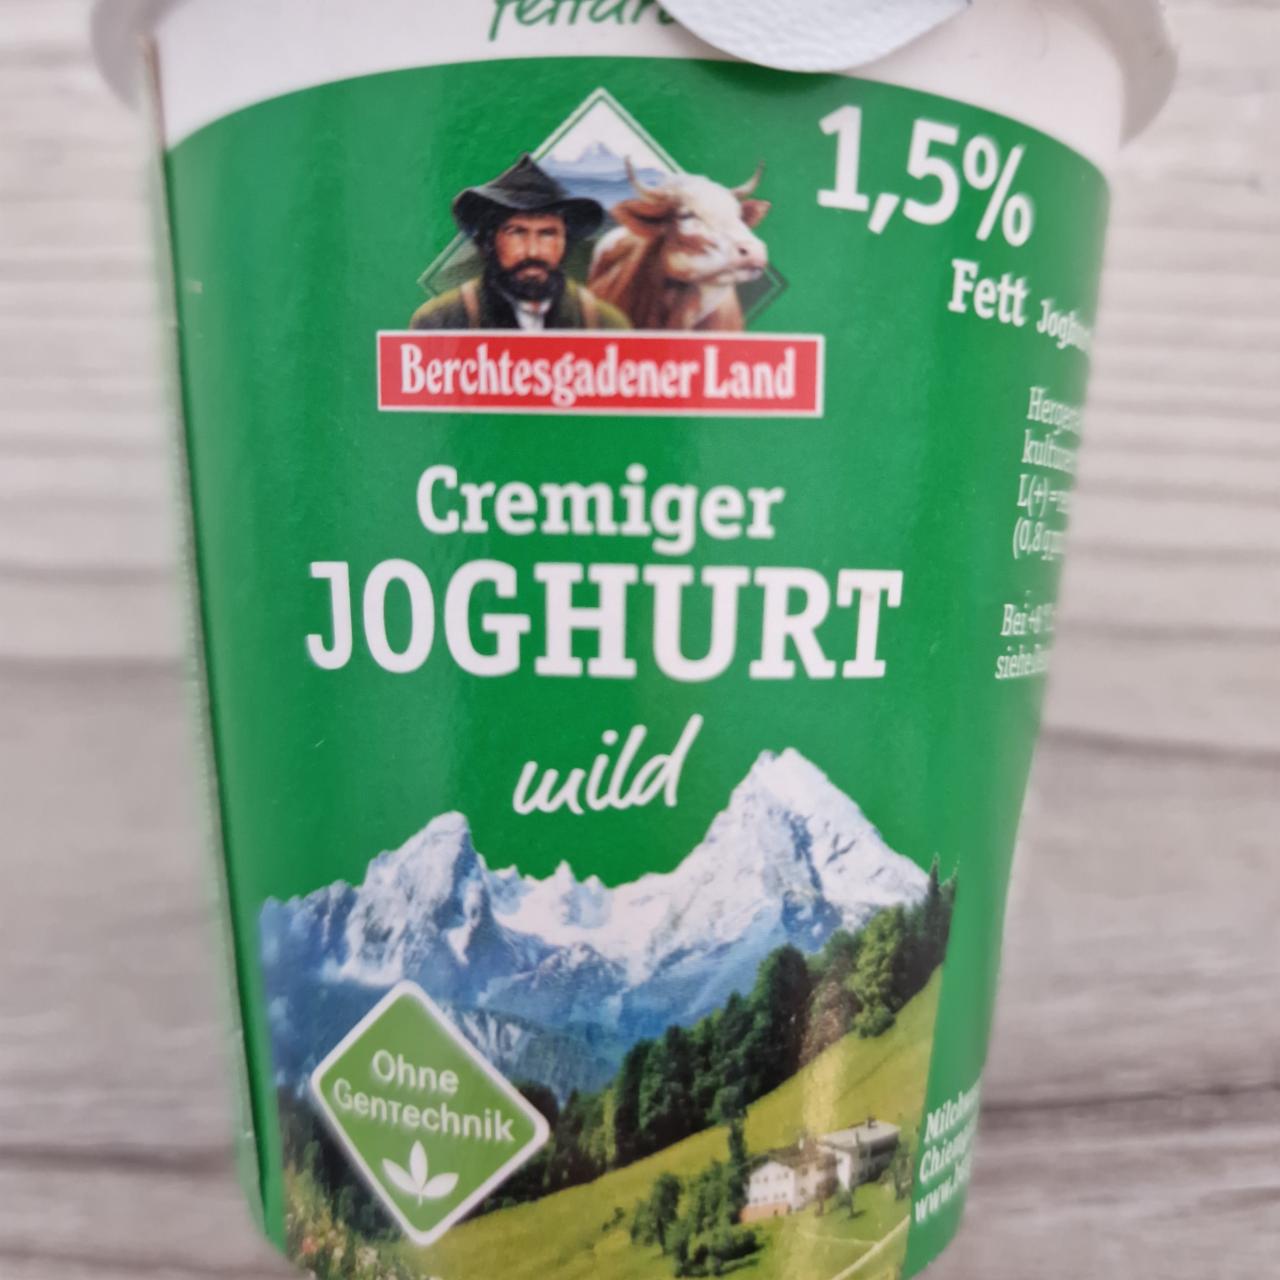 Fotografie - Cremiger Joghurt mild 1,5% Fett Berchtesgadener Land